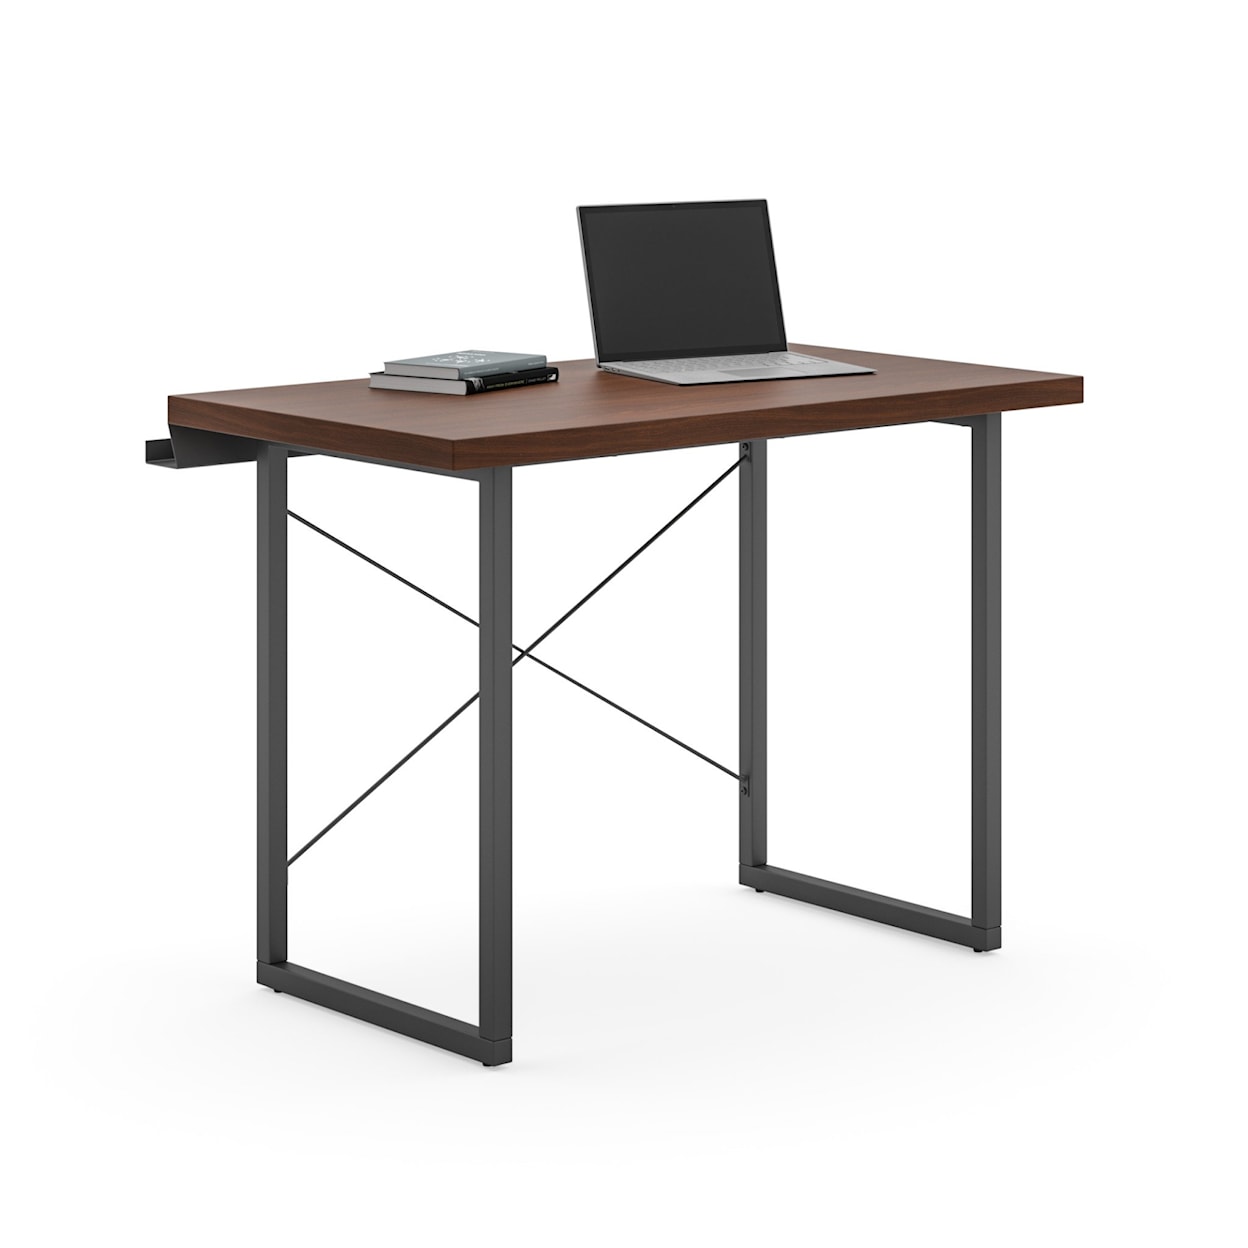 homestyles Merge Desk